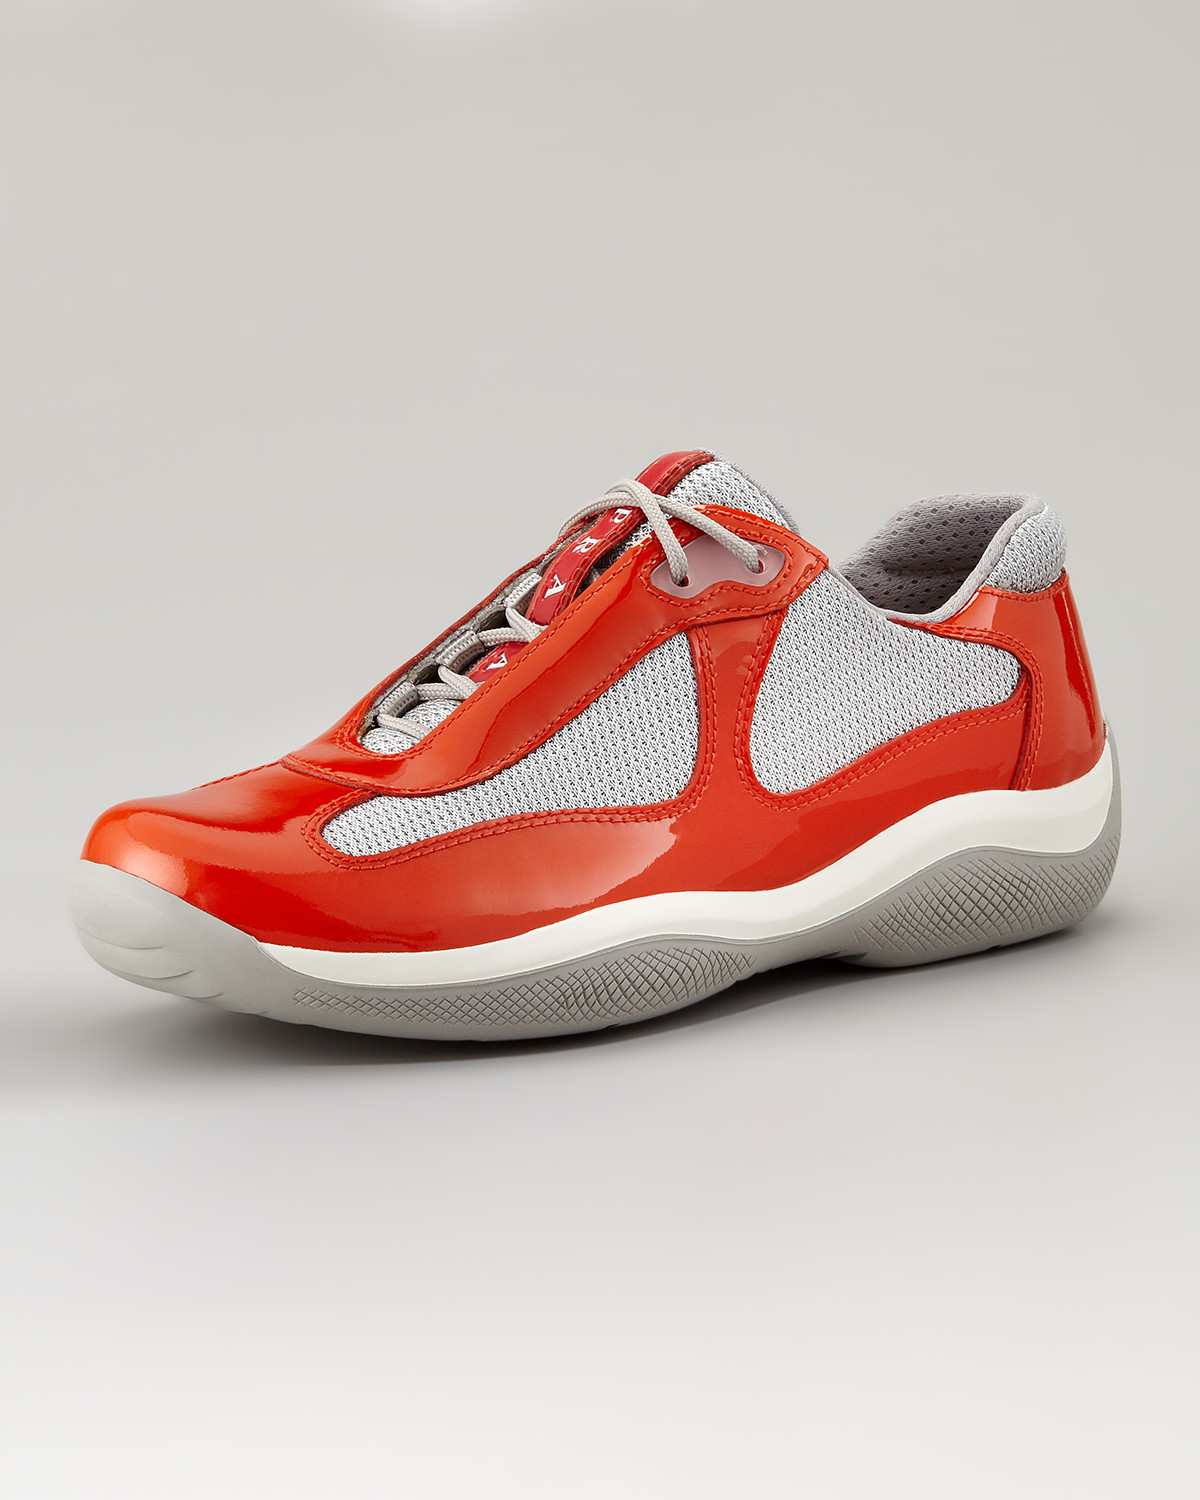 prada orange sneakers, OFF 72%,Latest 